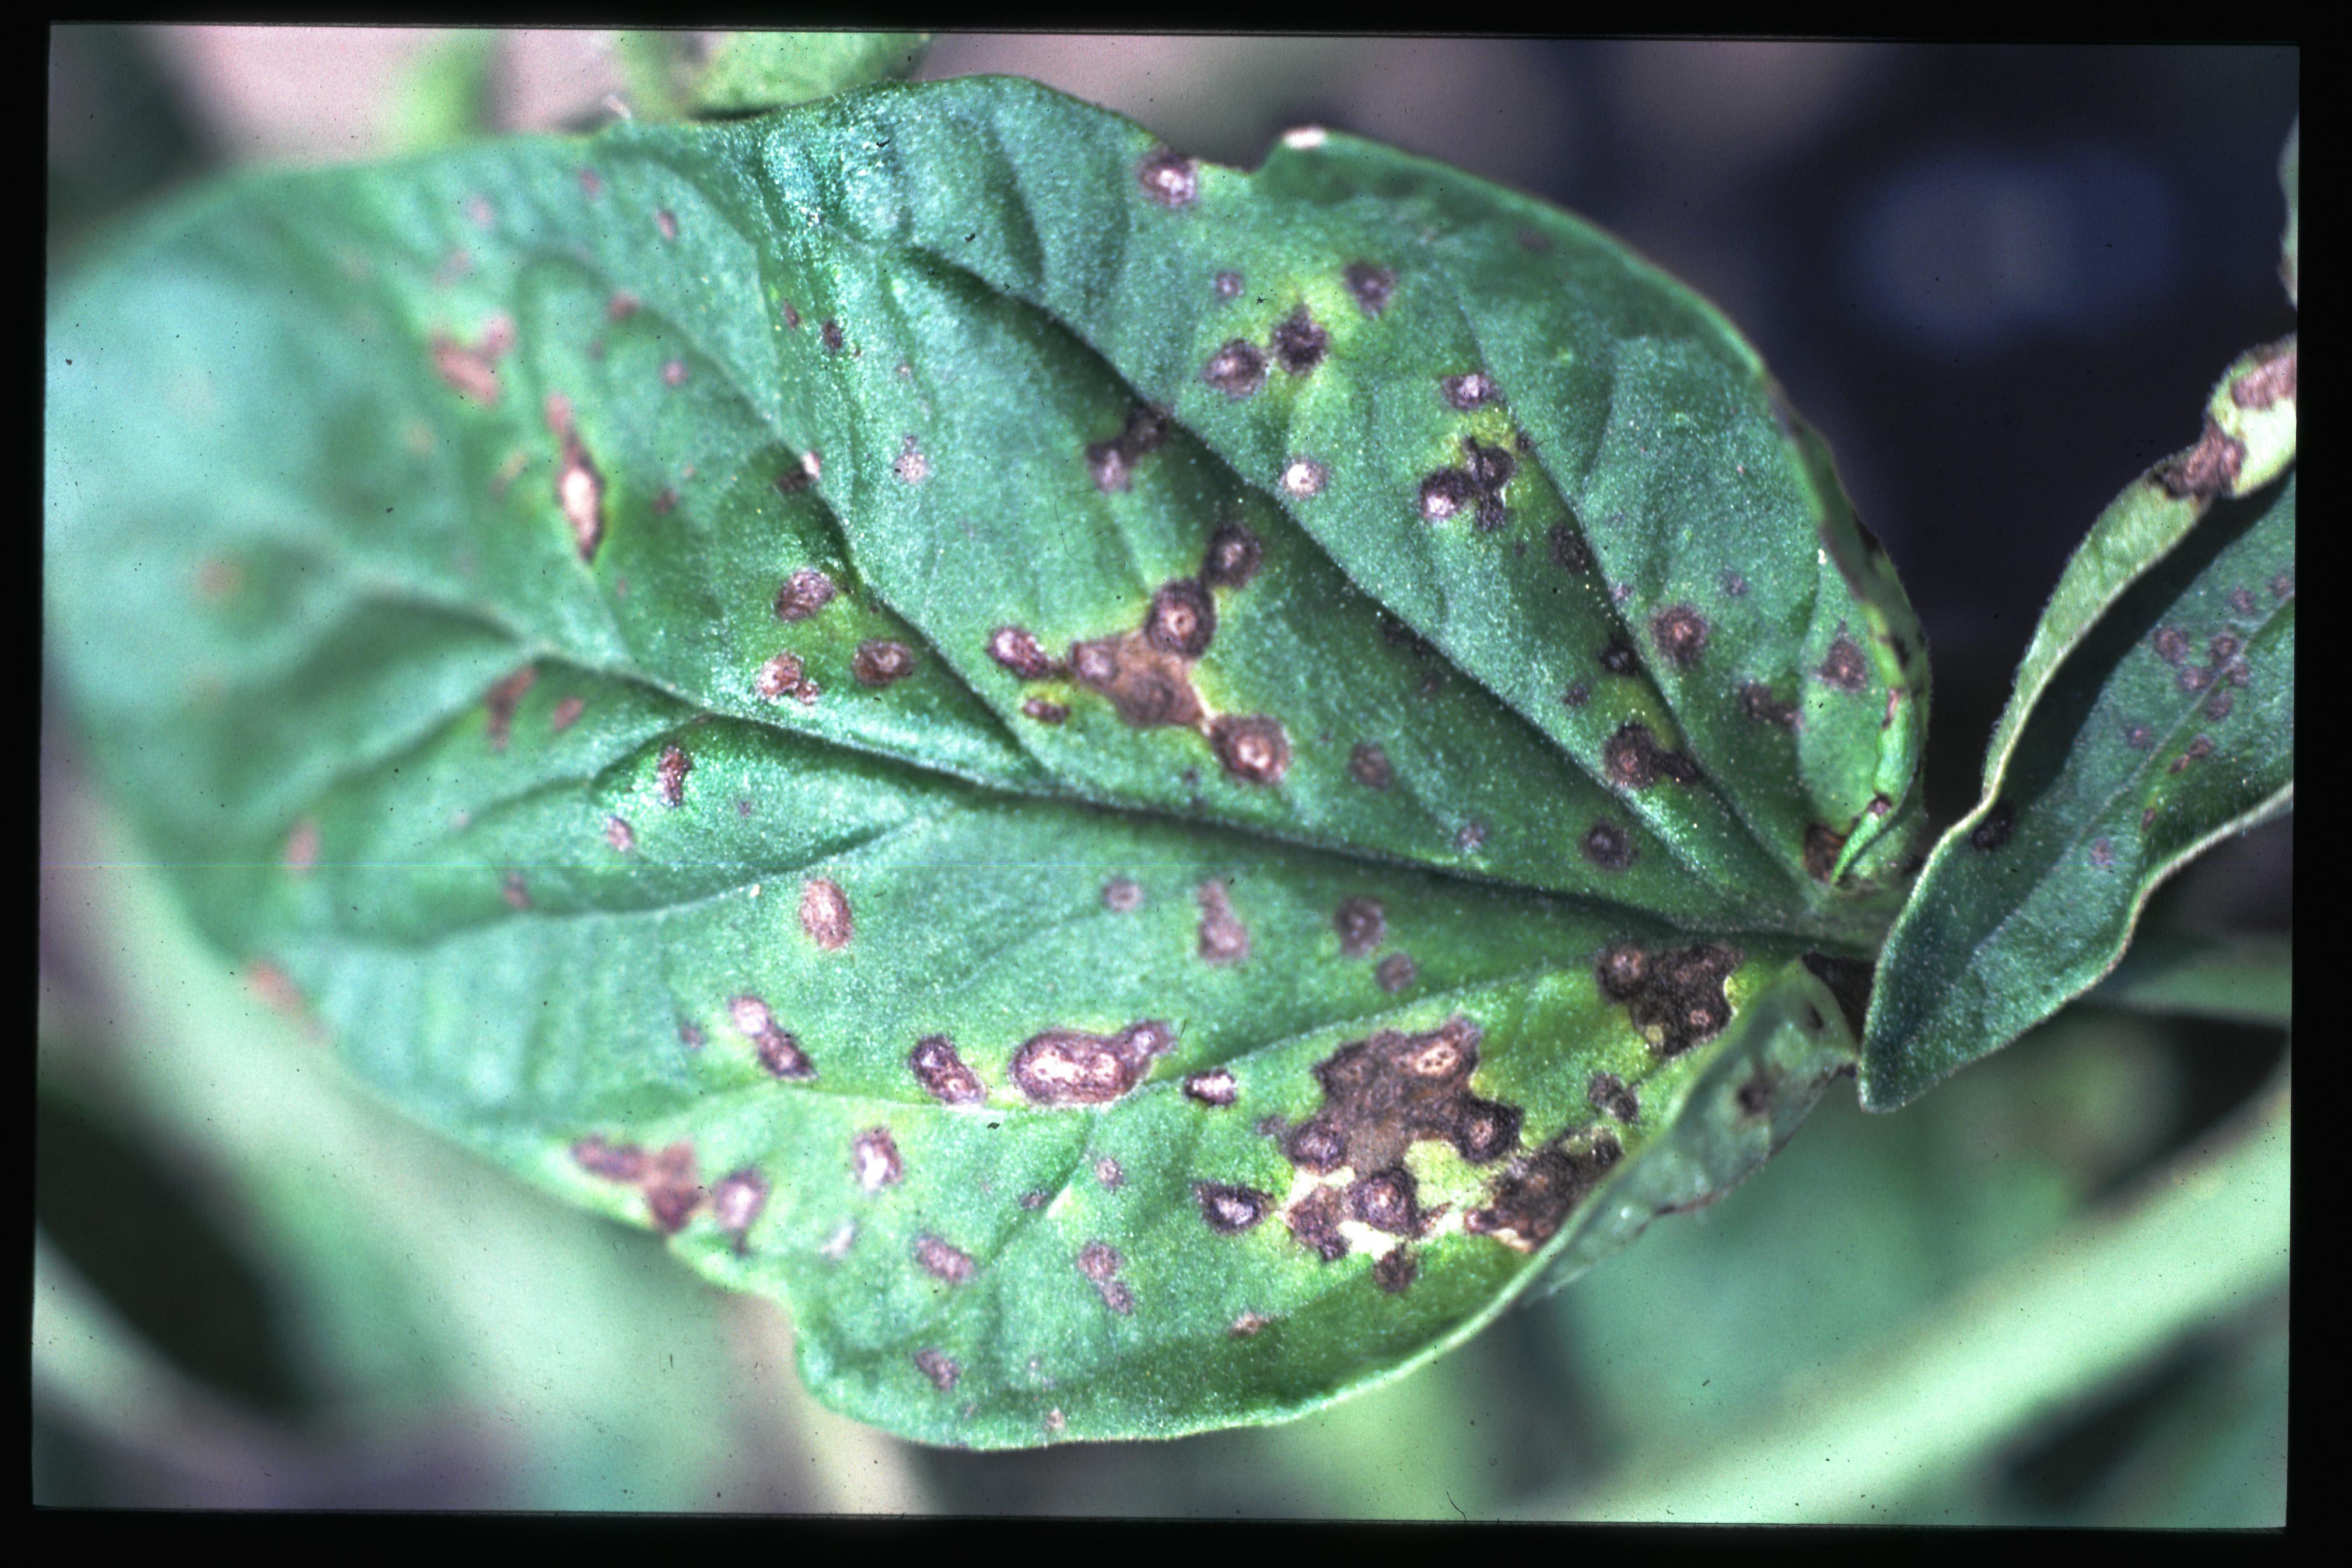 Septoria leaf spot lesions on tomato leaf